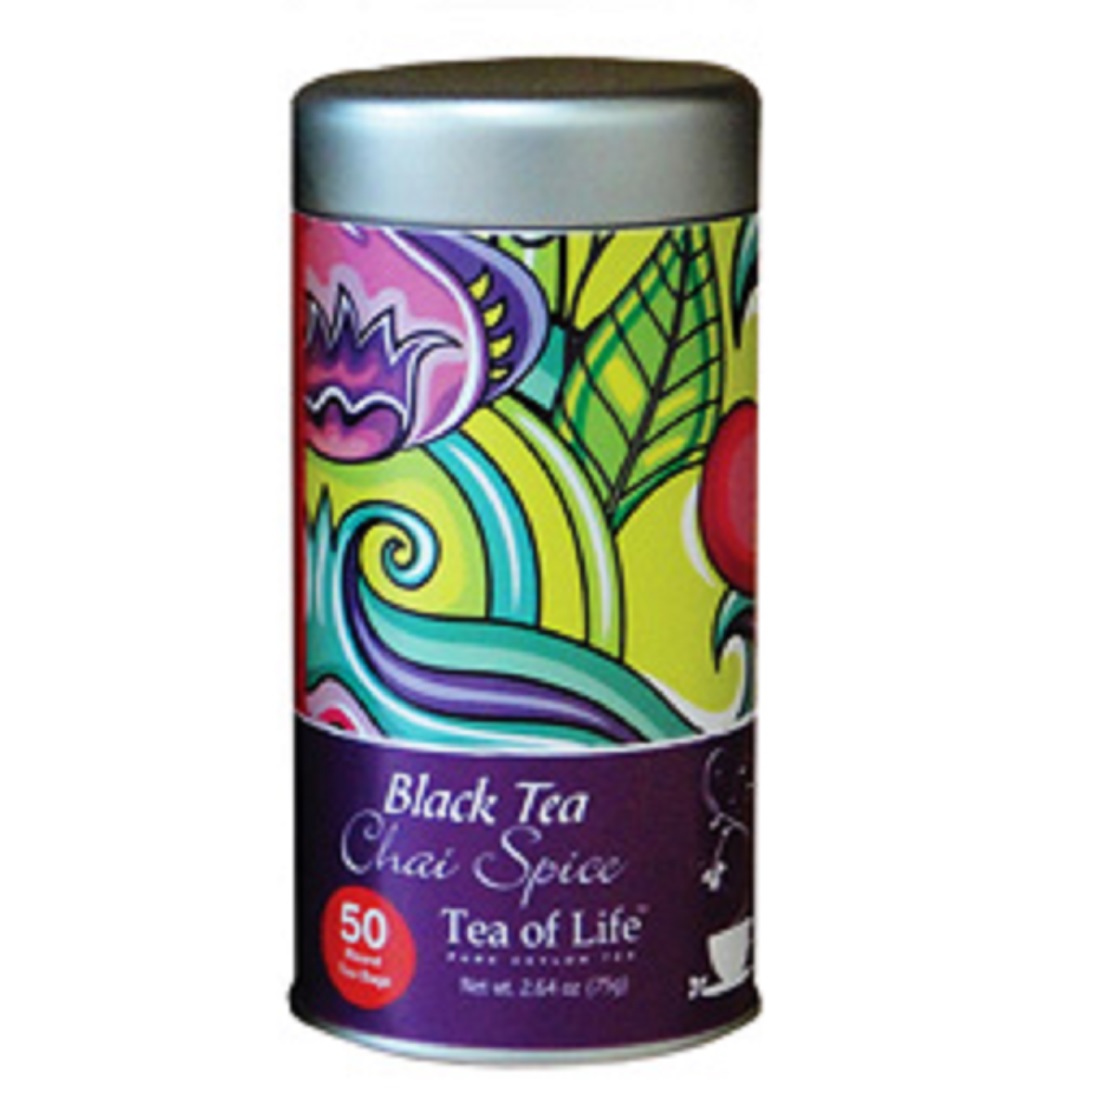 Black Tea Chai Spice